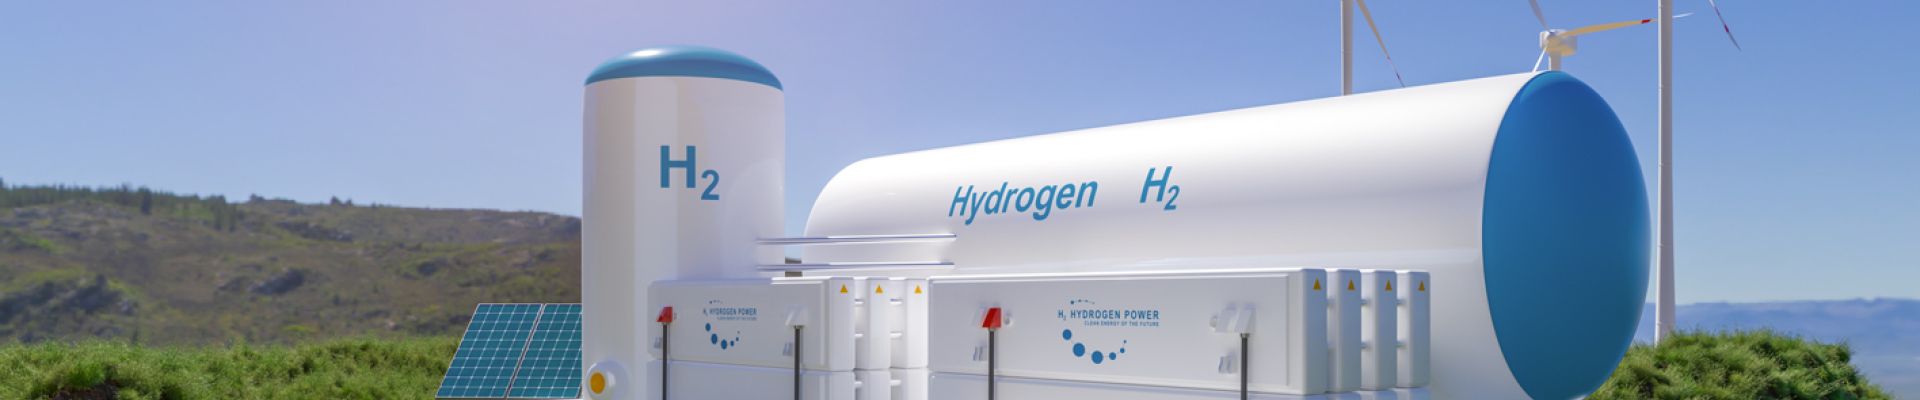 Hydrogen & storage: high strength, corrosion & pressure resistance